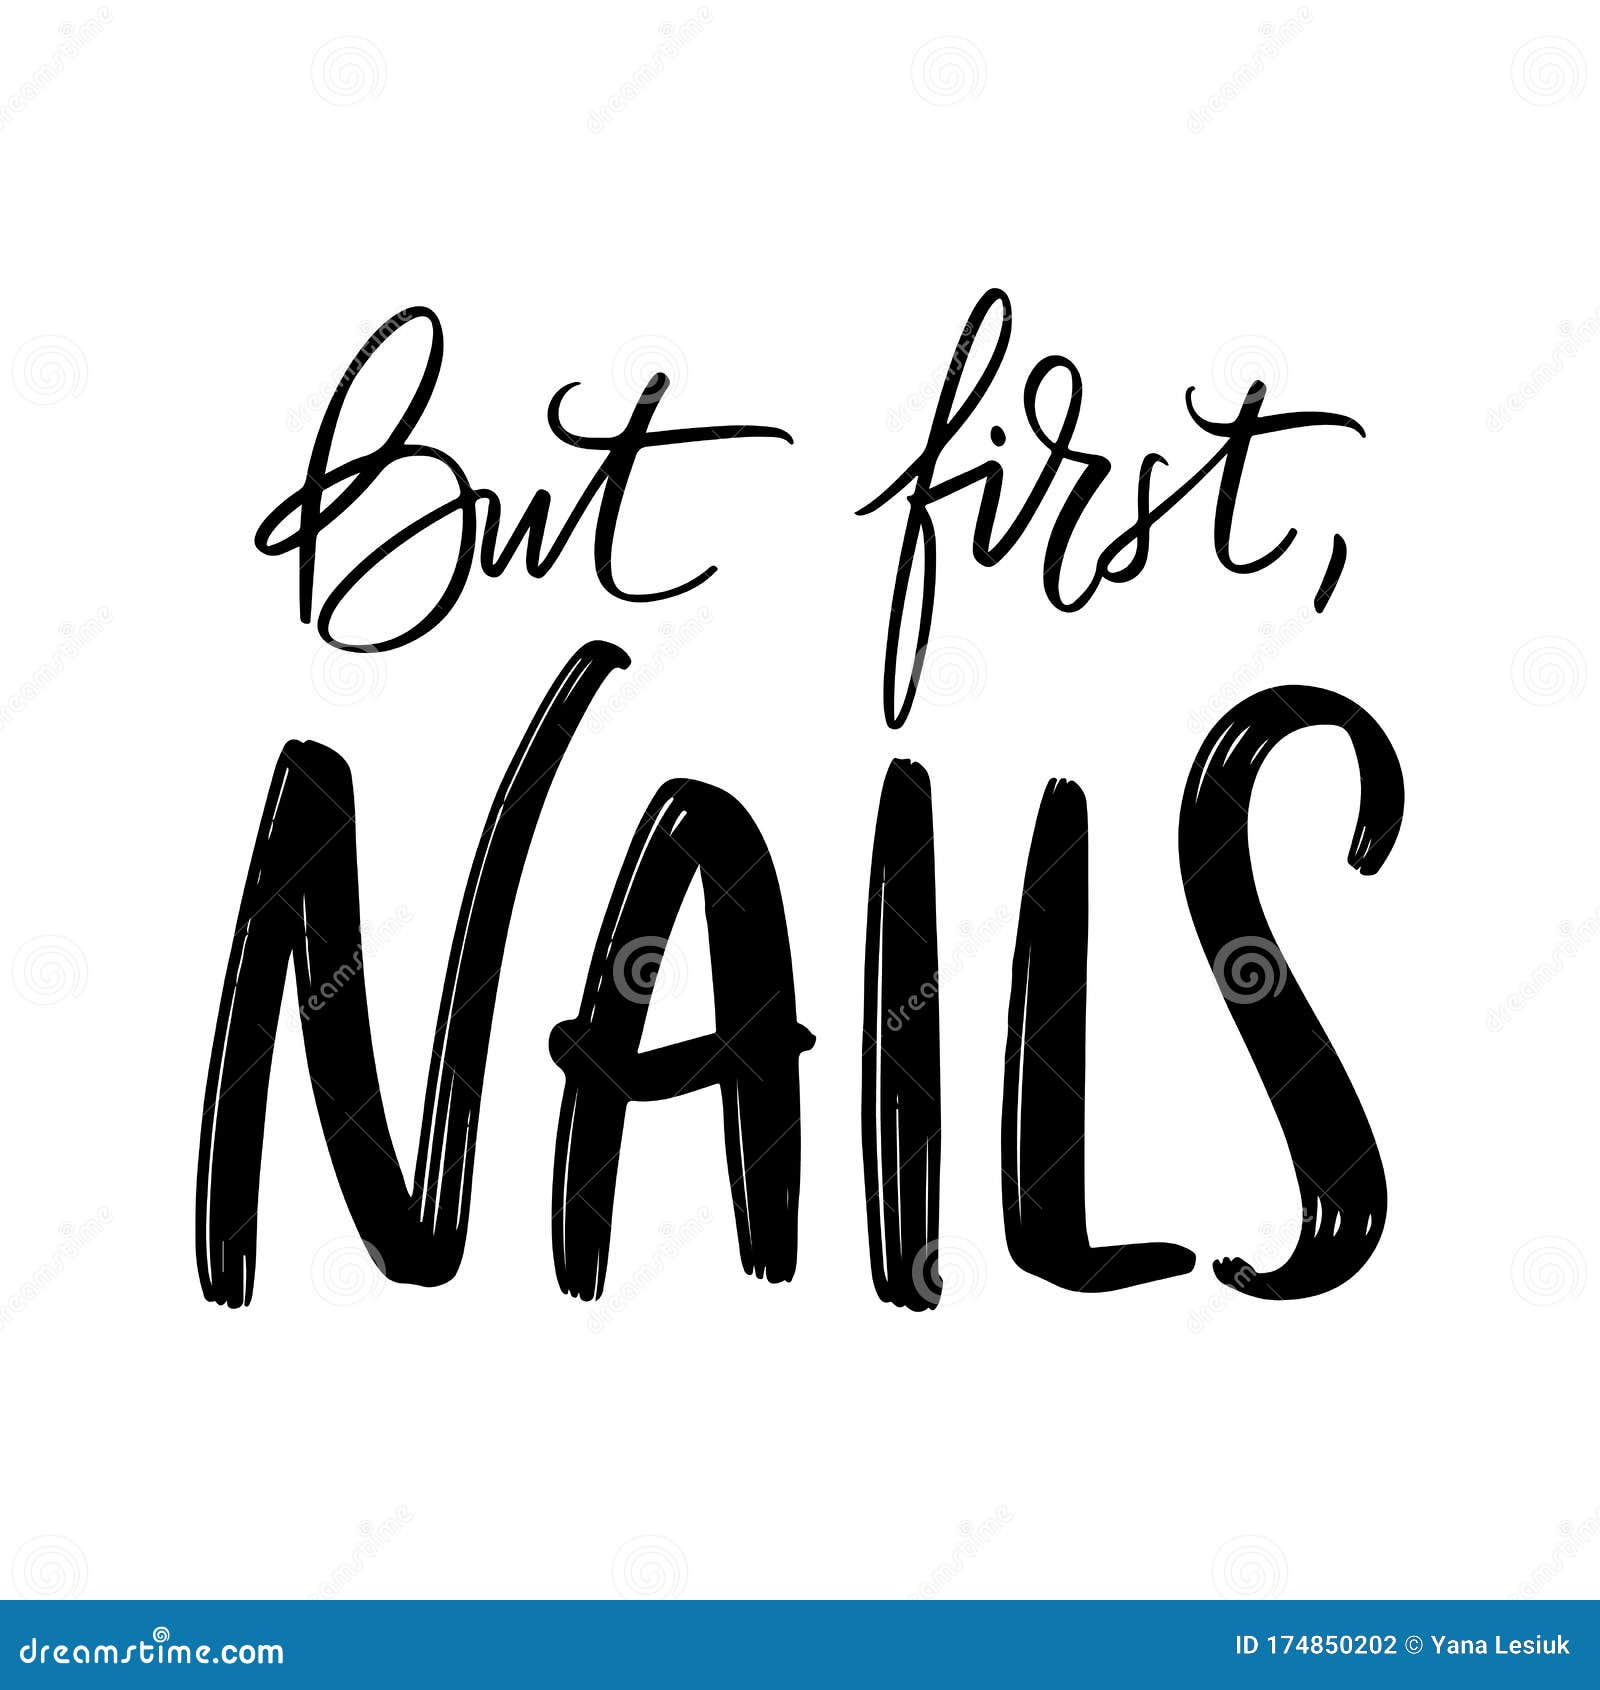 beautiful nail polish 👉💅 Follow me friends 💅👈 #beautiful nail polish  video ꧁𝑀𝑎ℎ𝑖 𝑘ℎ𝑎𝑛꧂ - ShareChat - Funny, Romantic, Videos, Shayari,  Quotes